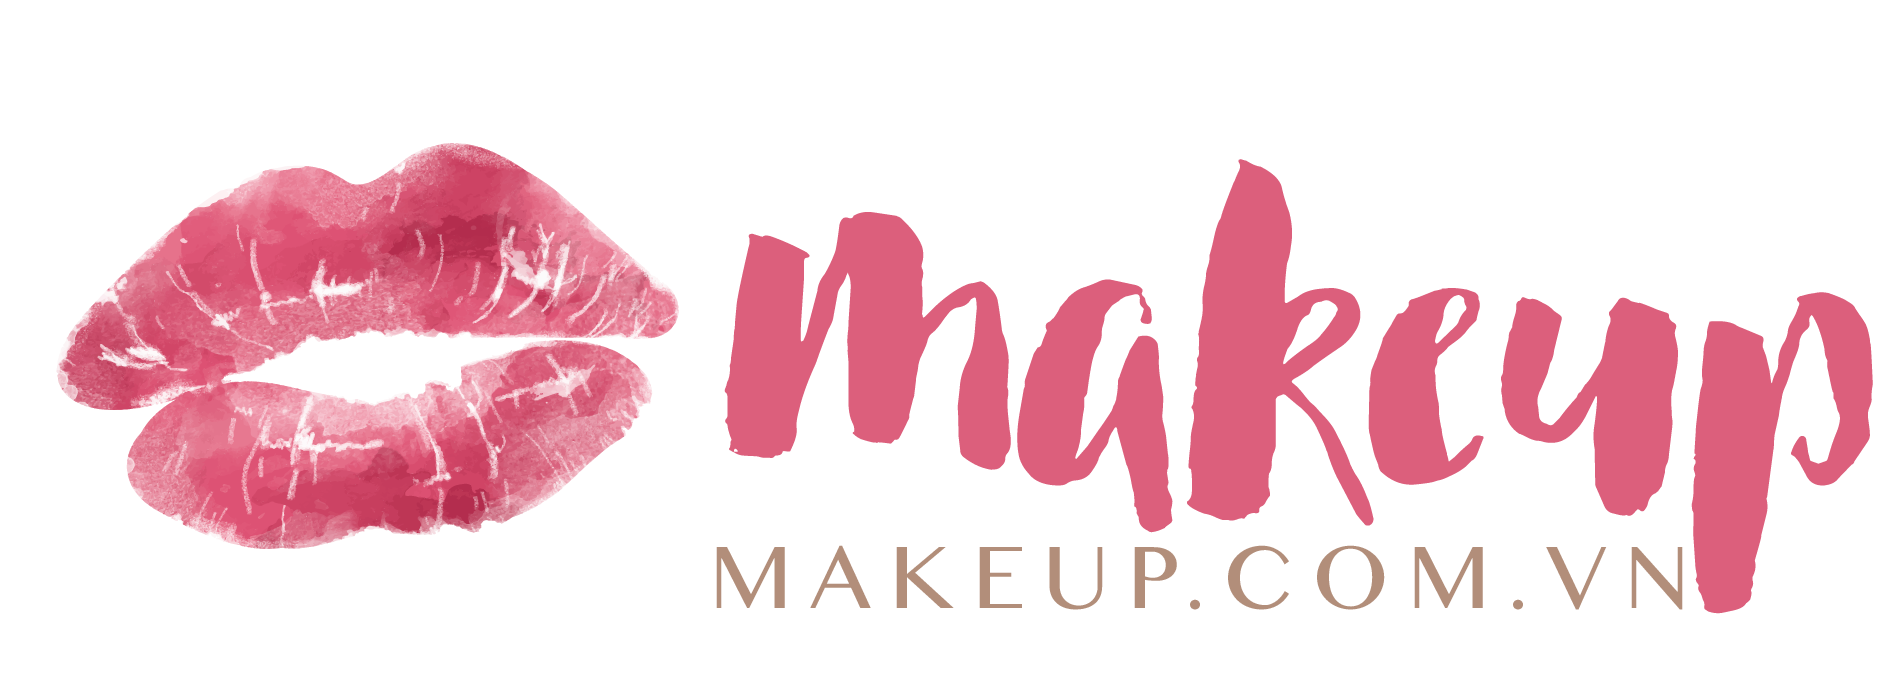 Makeup.com.vn